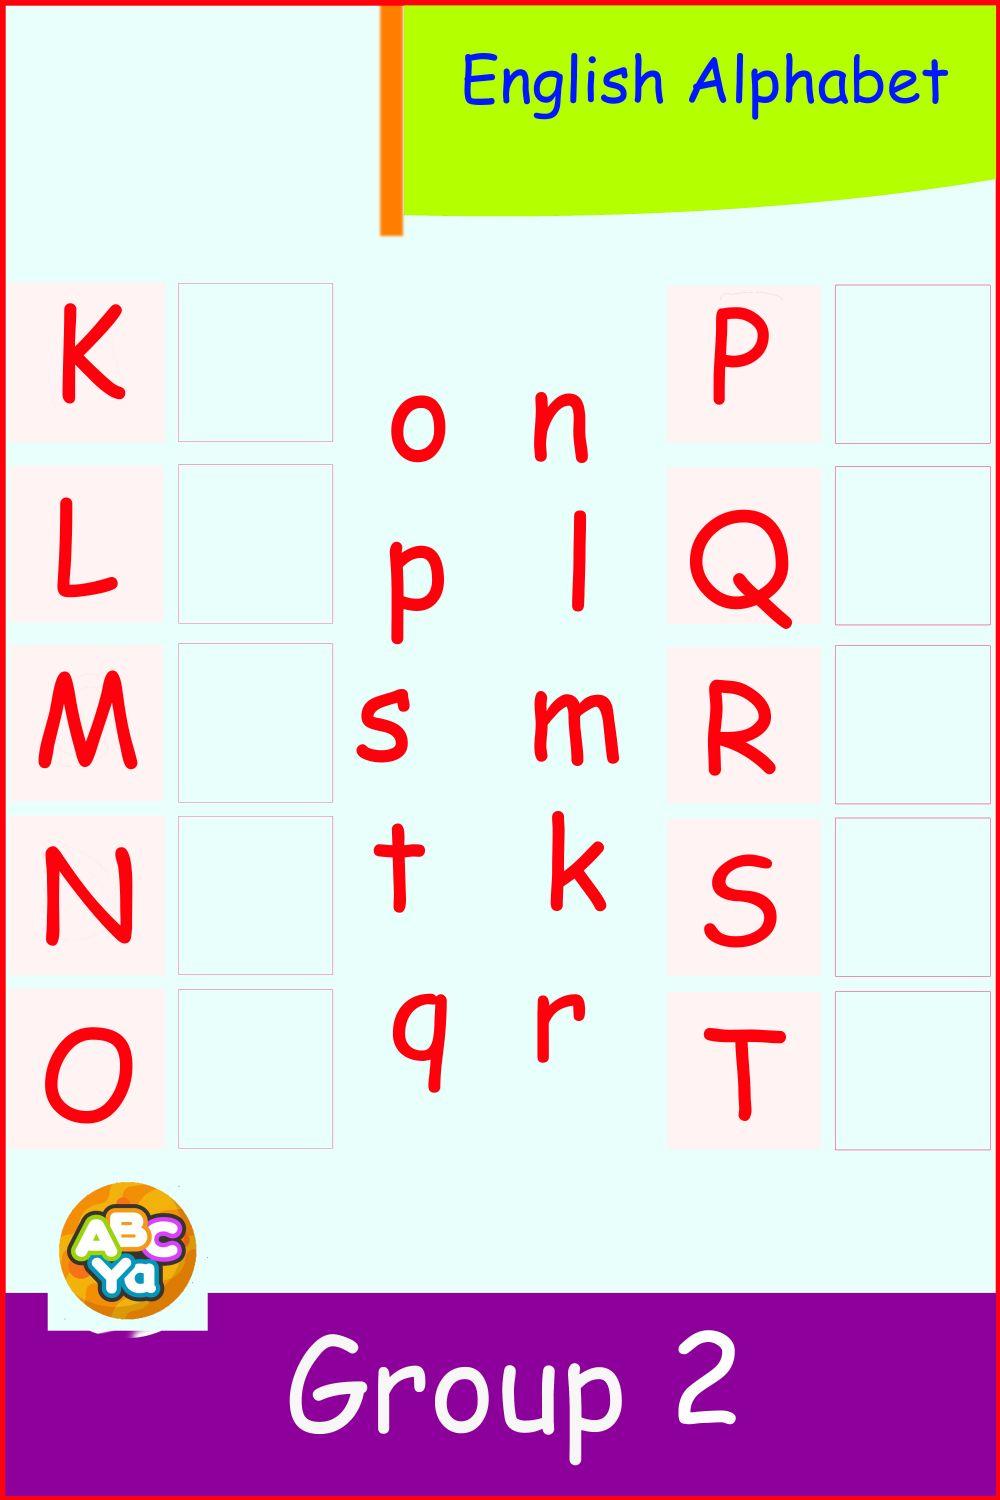 English Alphabet - Group 2 - K - T 